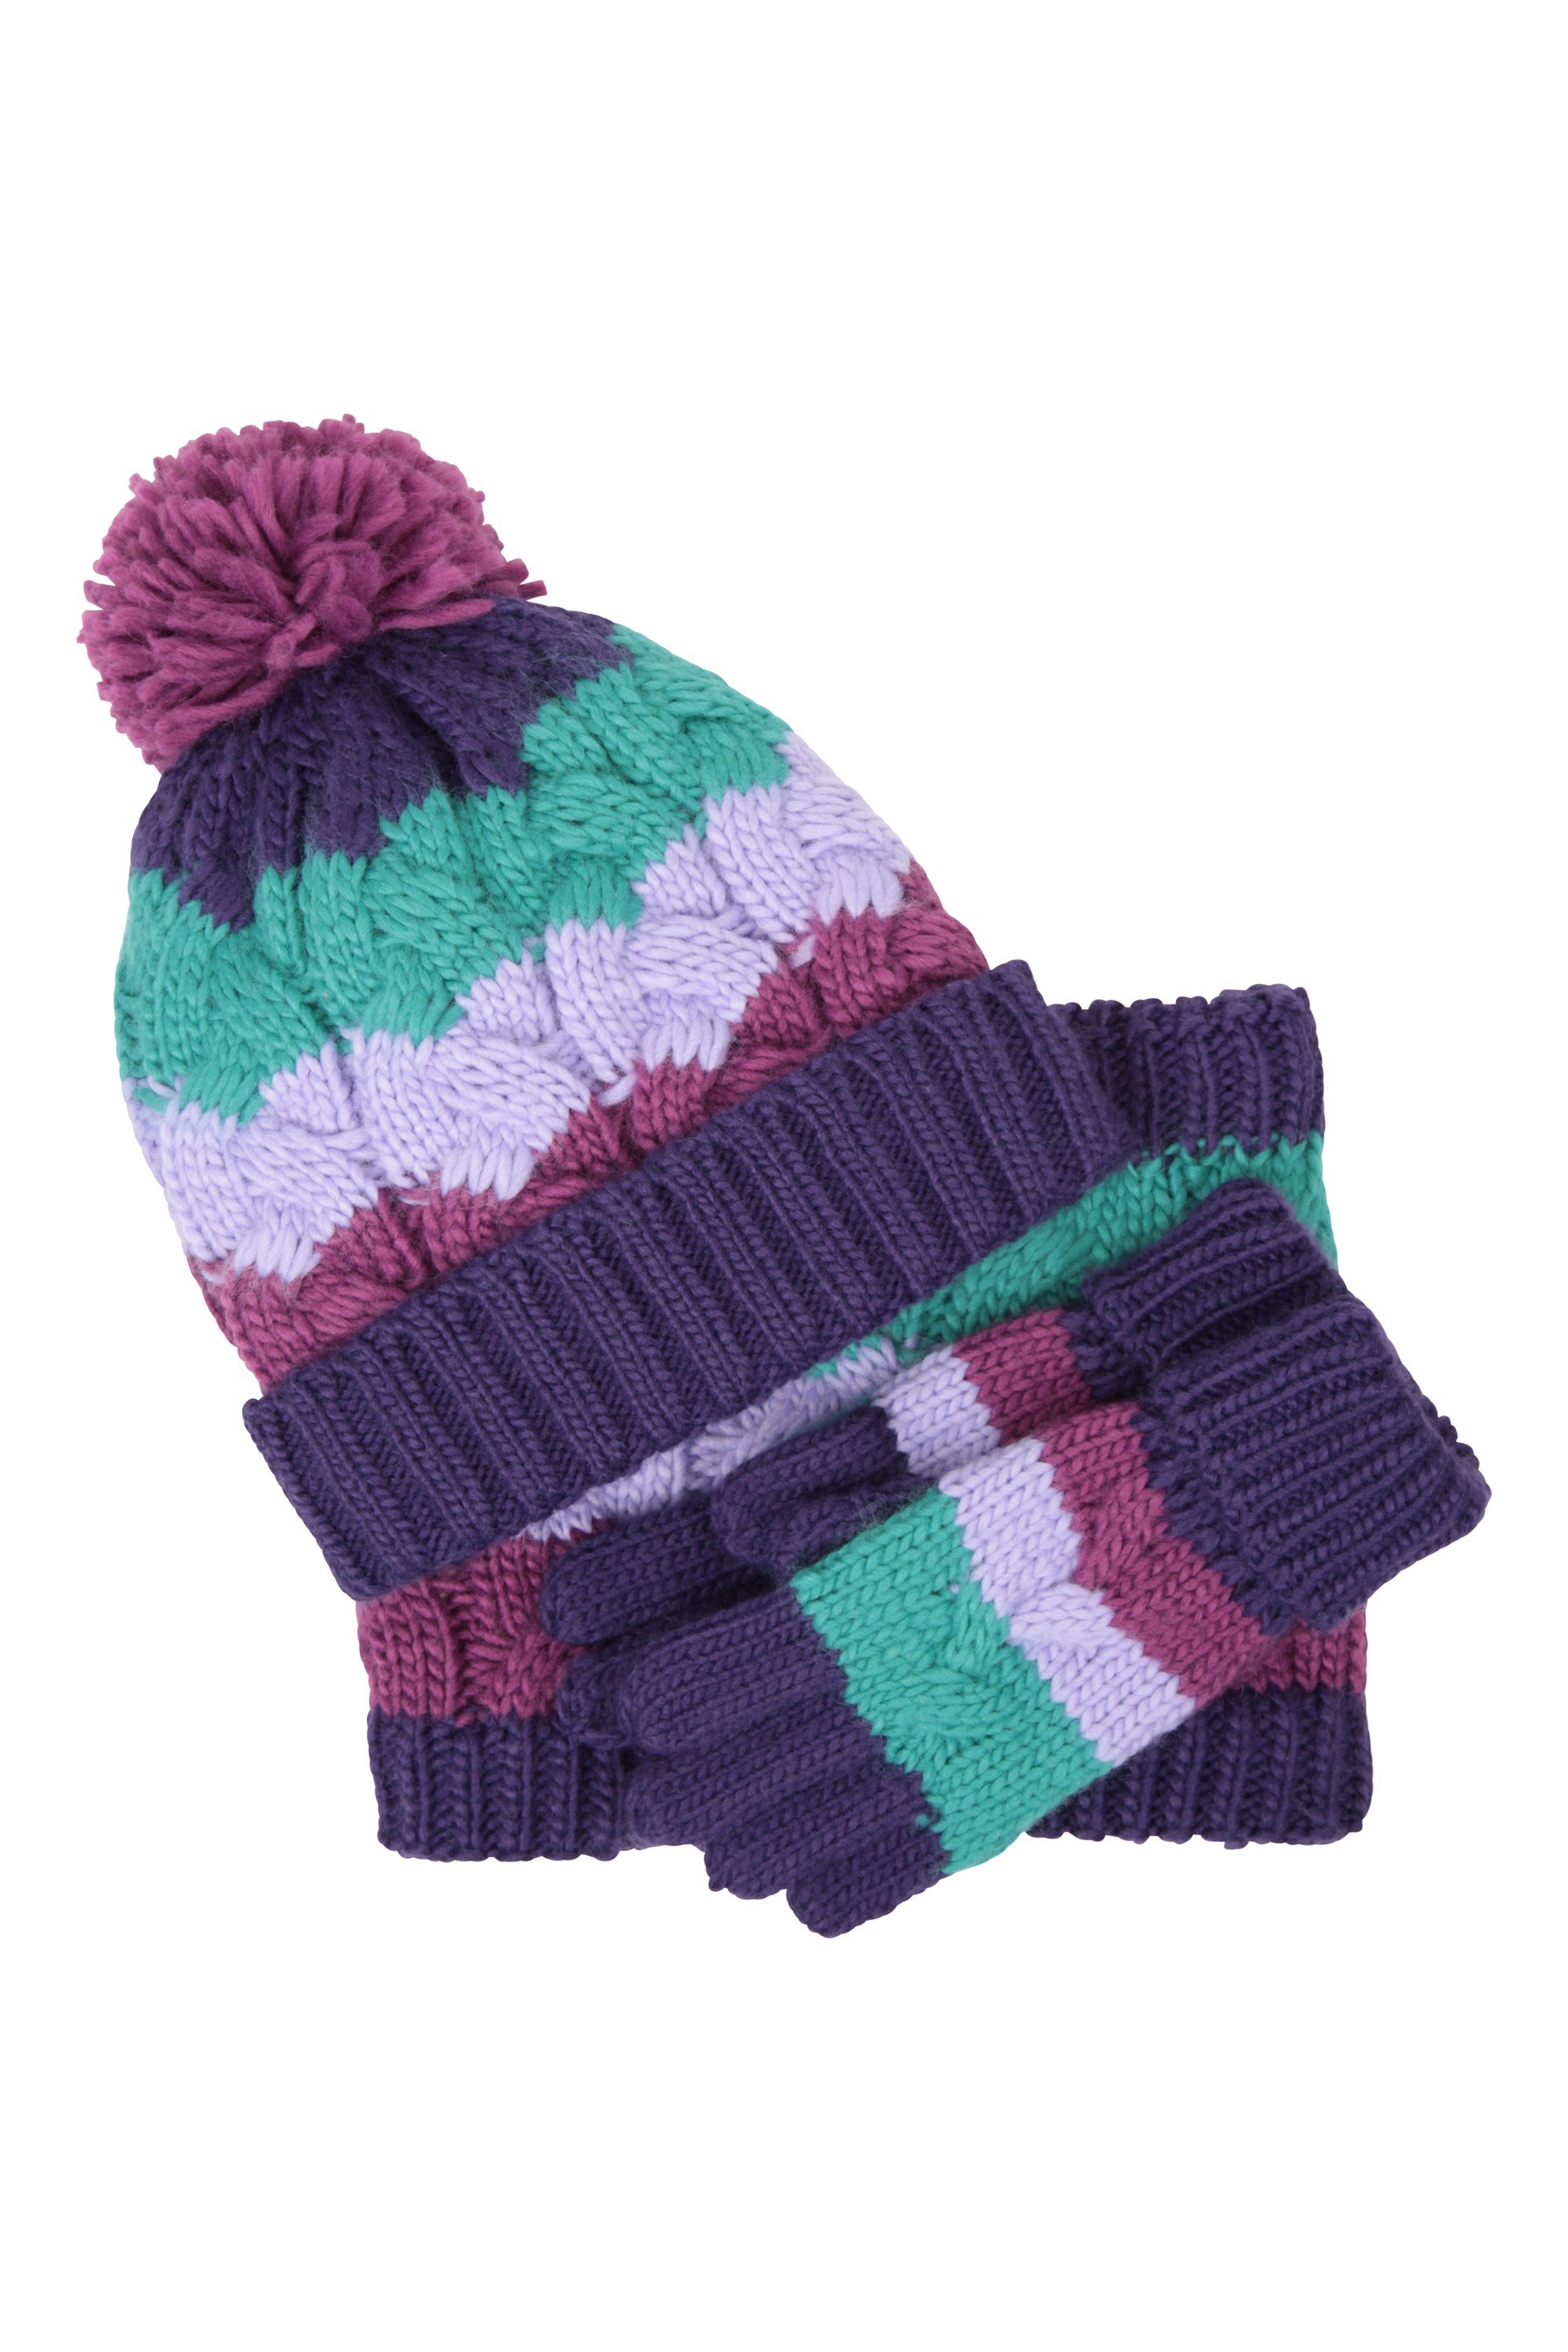 Chunky Knit Kids Winter Accessories Set - Purple